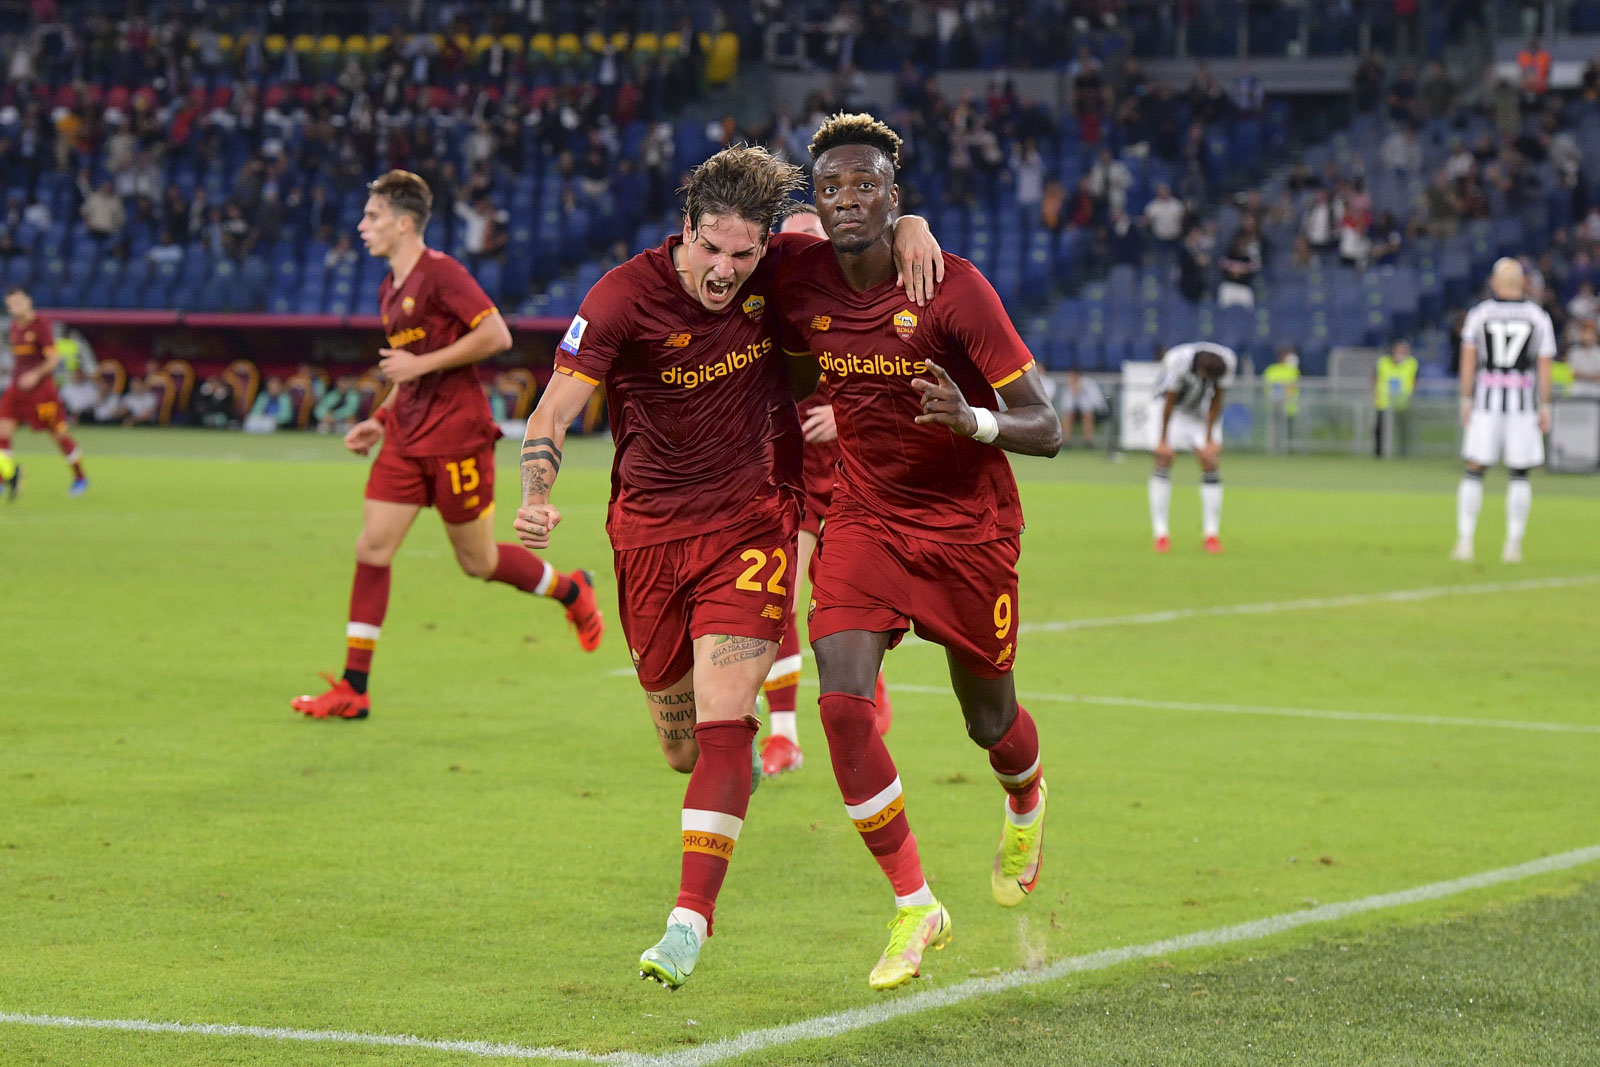 Abraham celebrates a goal for Roma